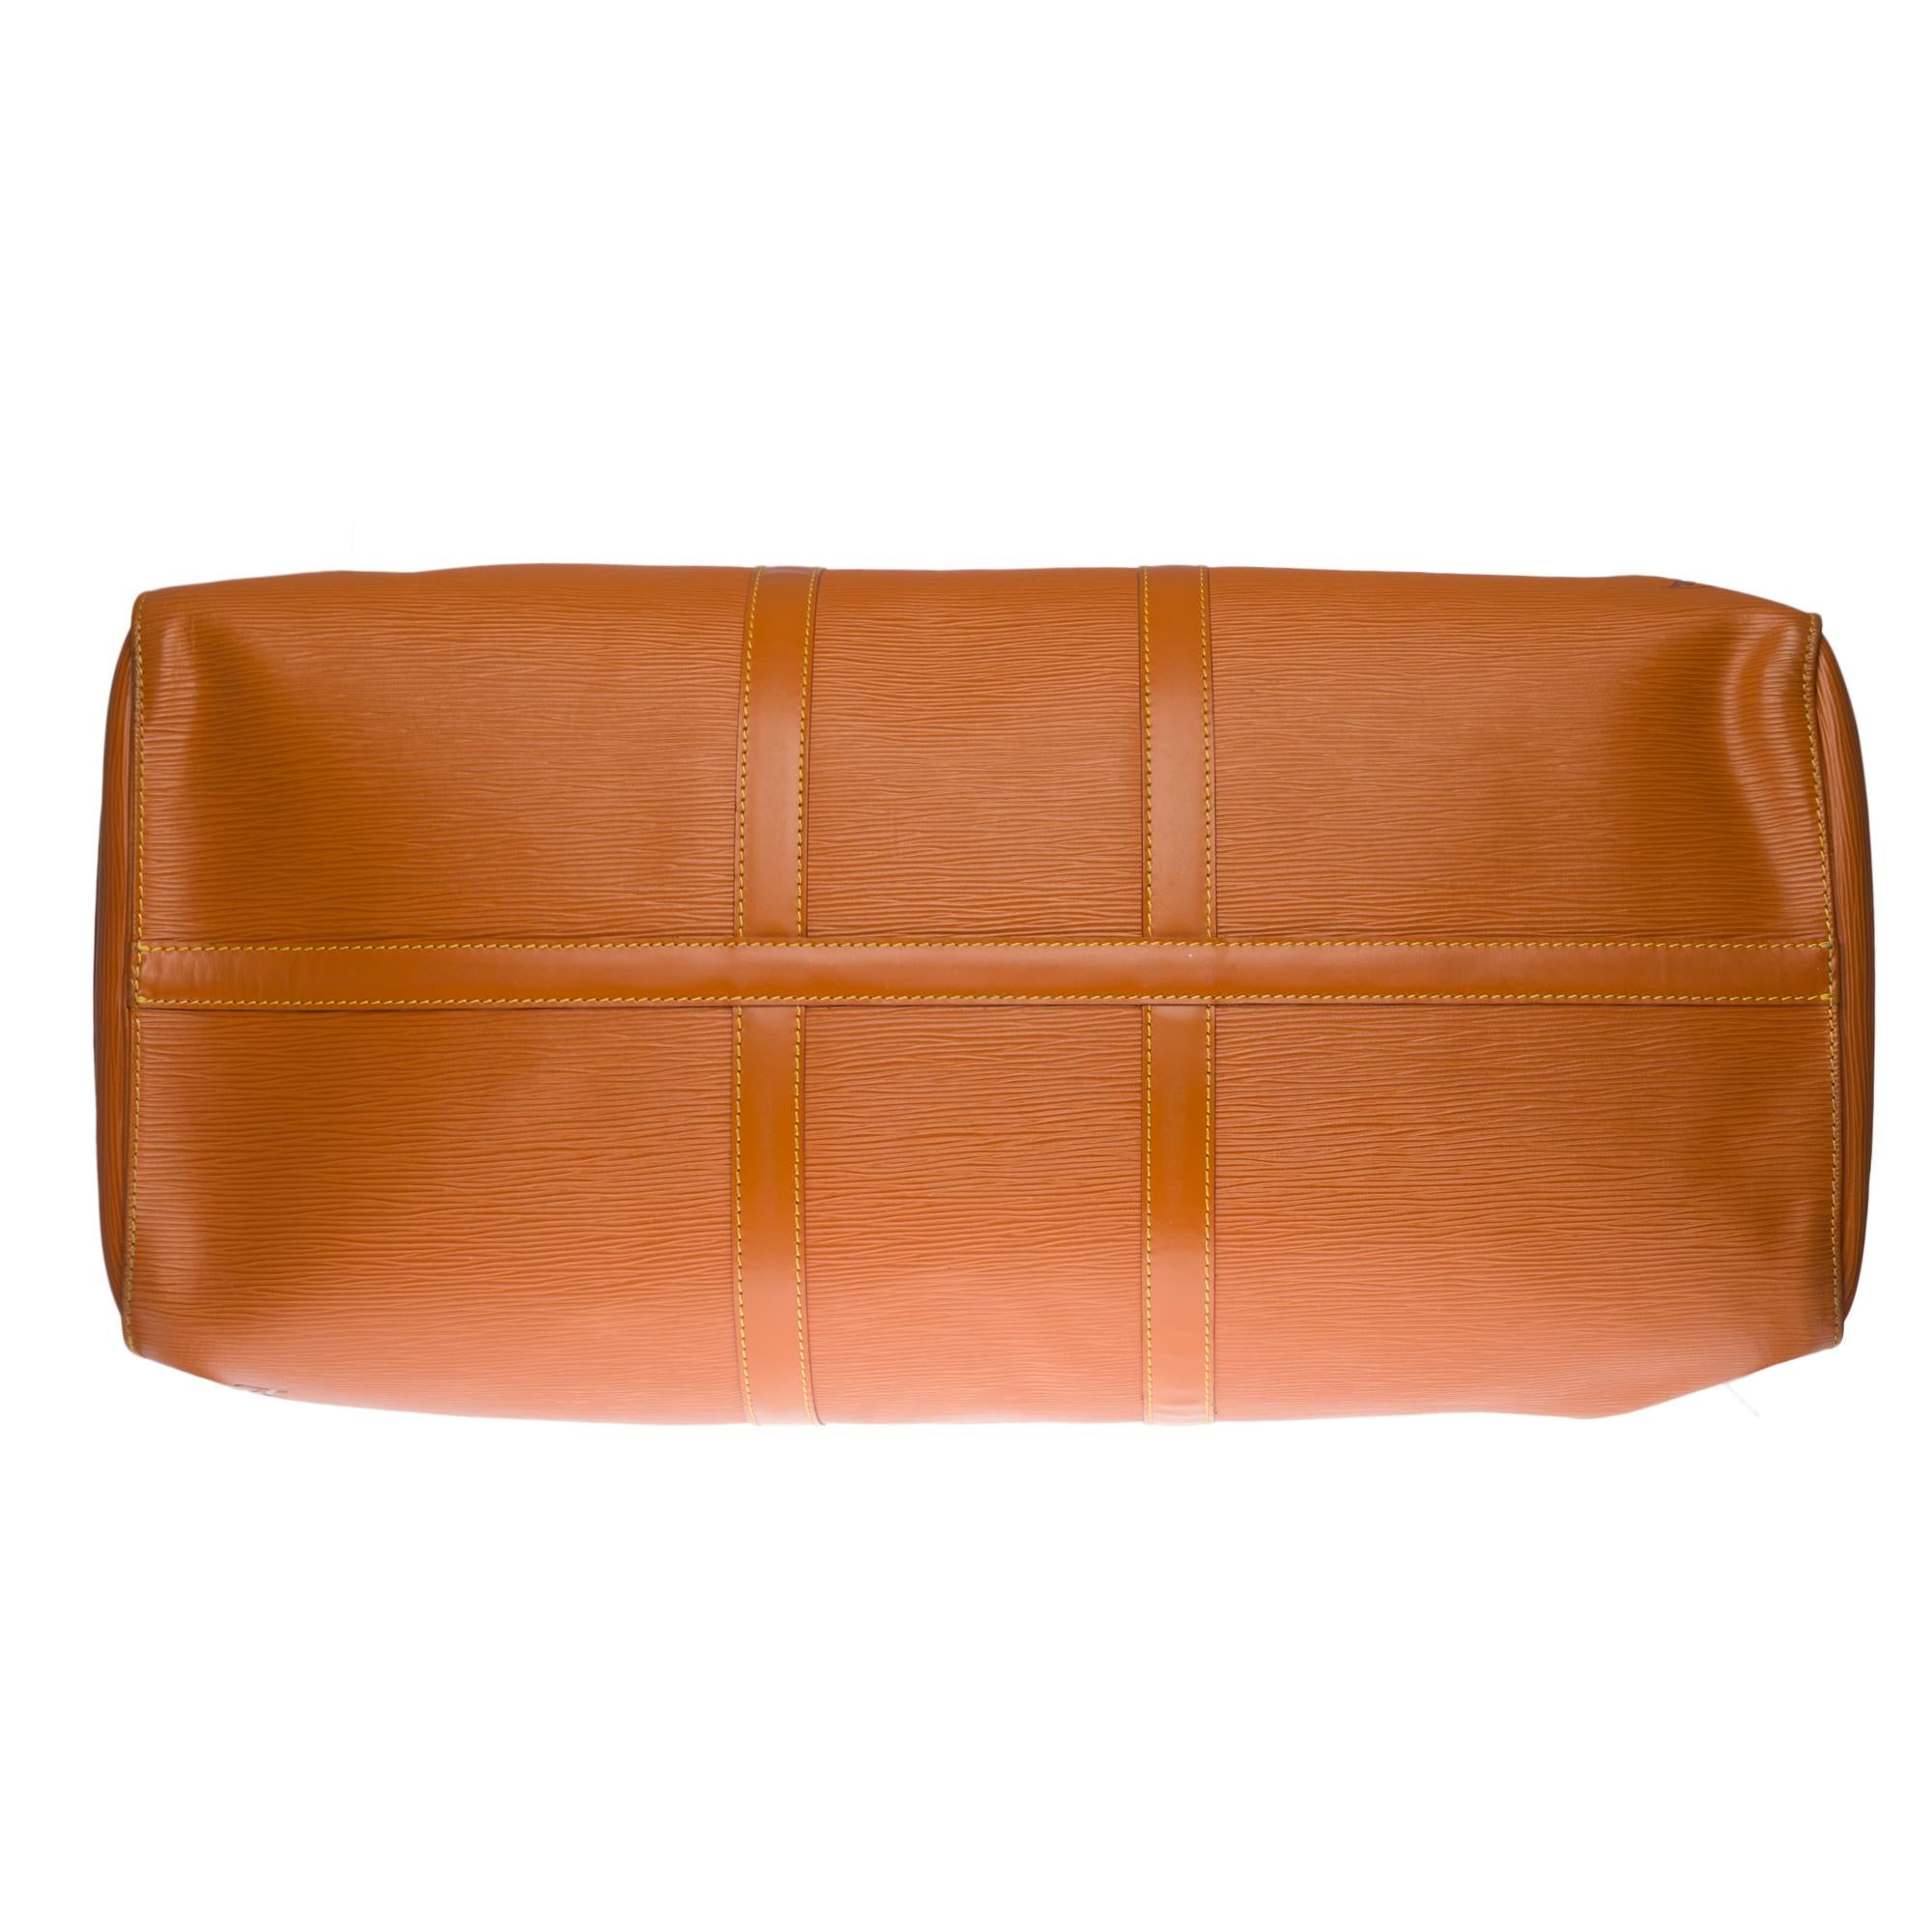 Louis Vuitton Keepall 55 Travel bag in cognac épi leather 1